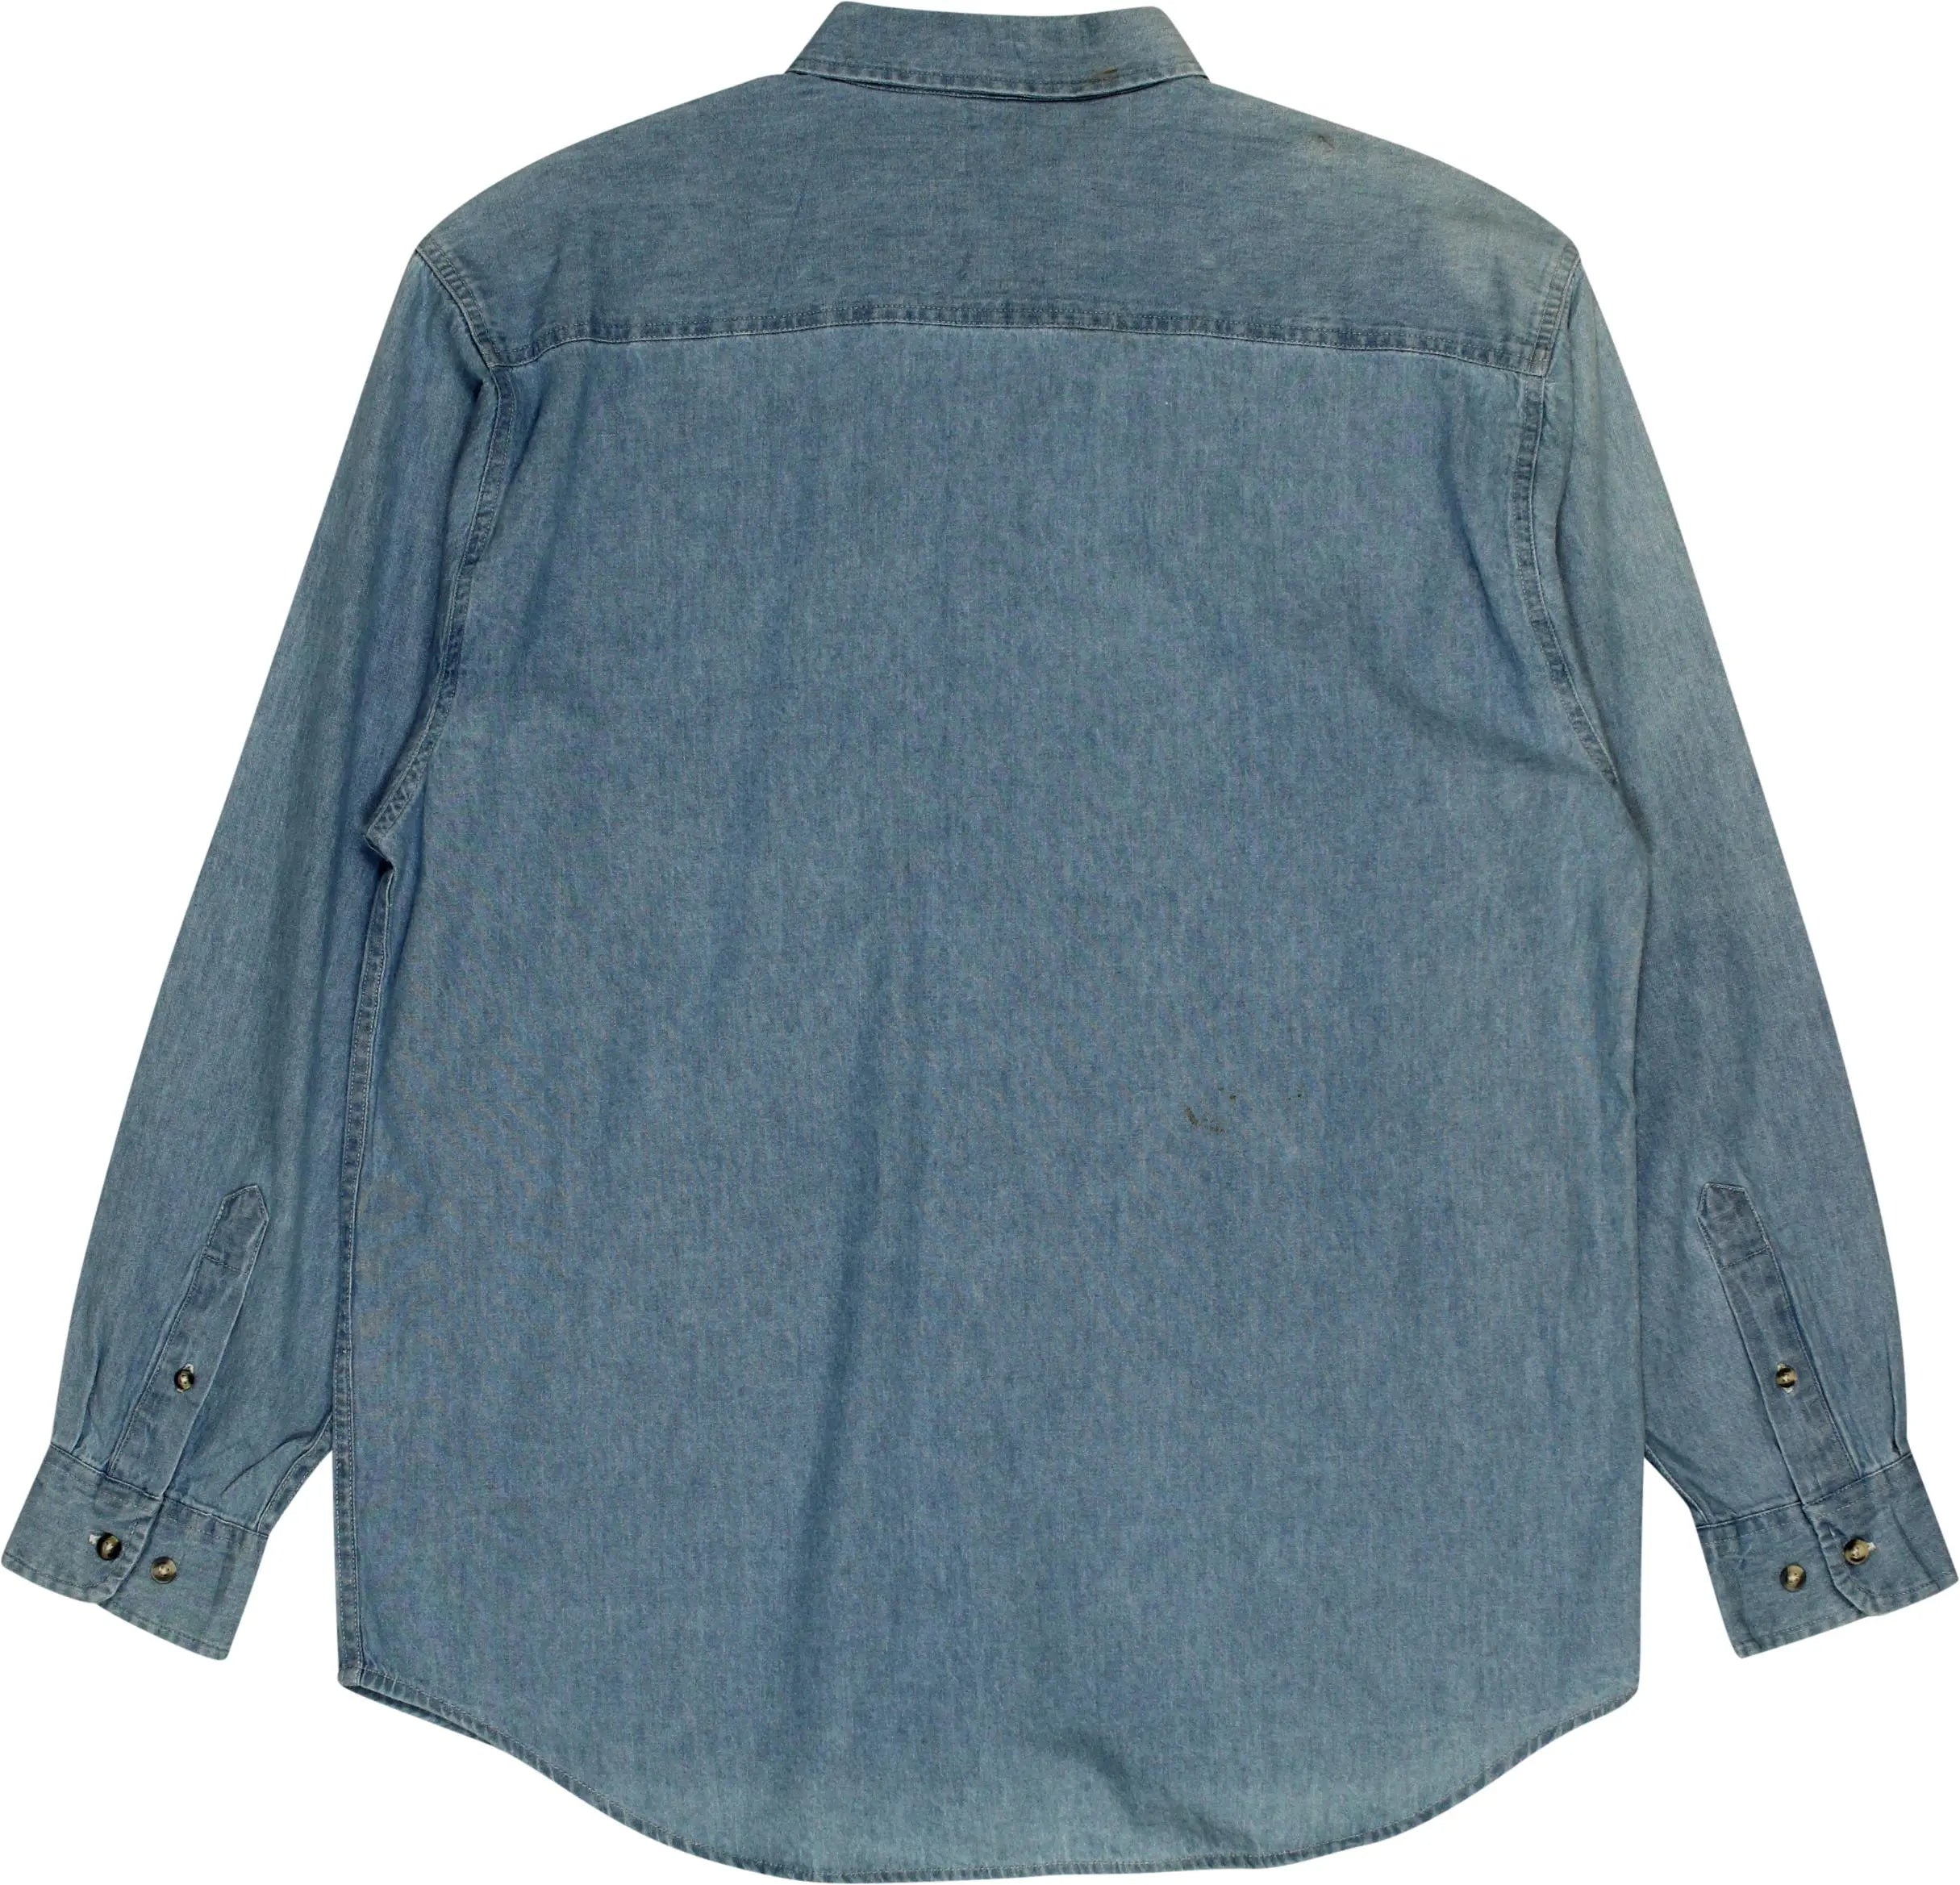 Port & Company - Denim Shirt- ThriftTale.com - Vintage and second handclothing